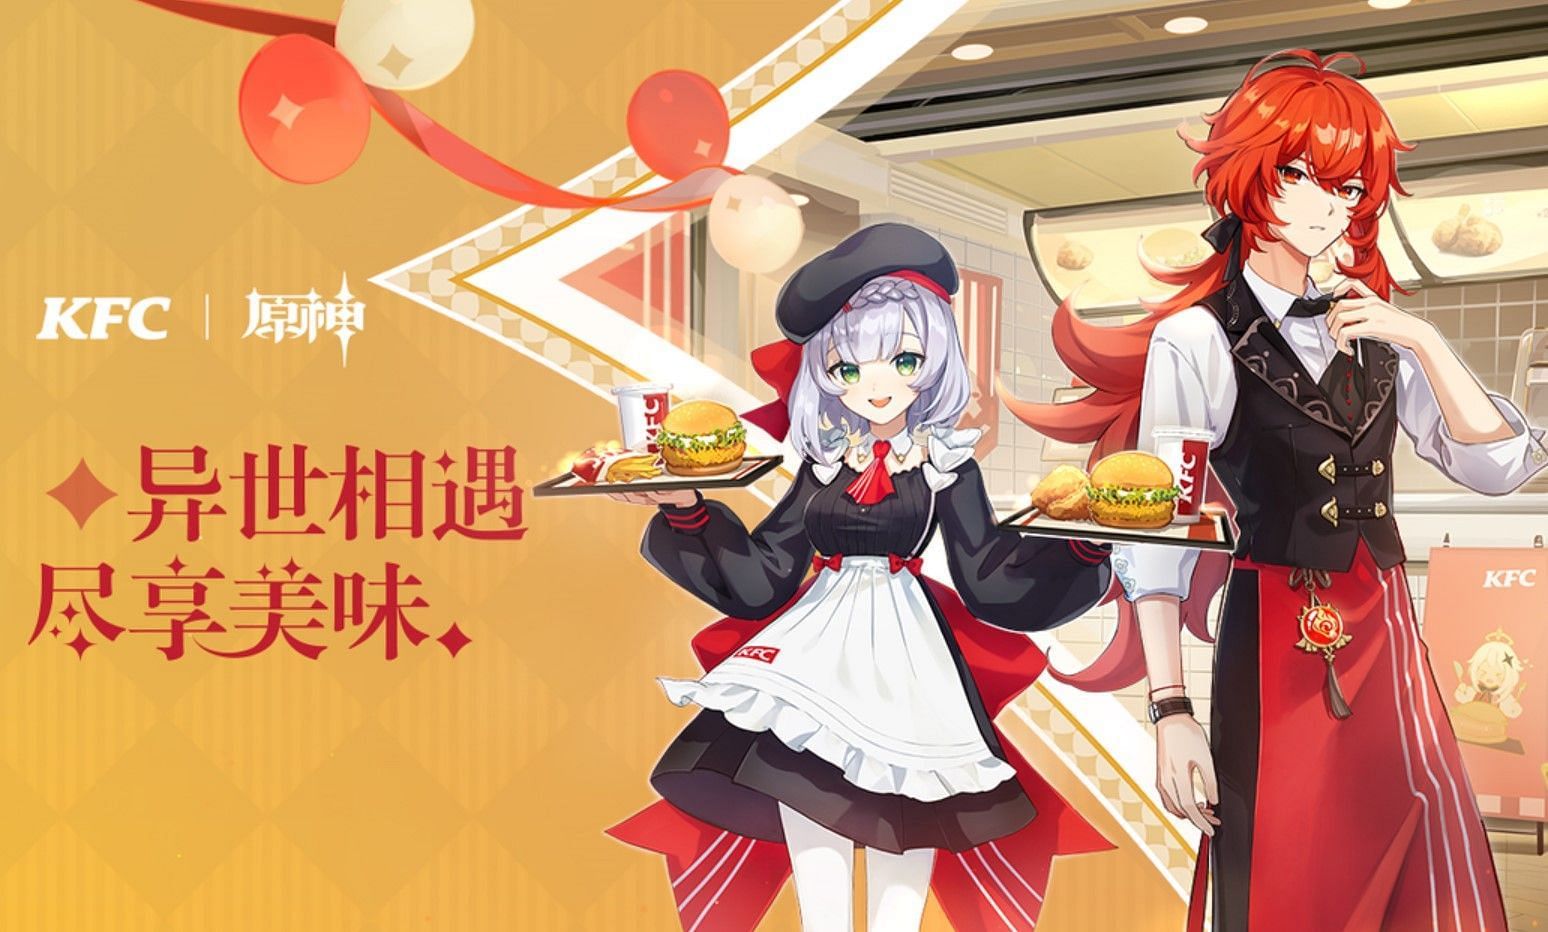 The KFC promotion (Image via Genshin Impact)